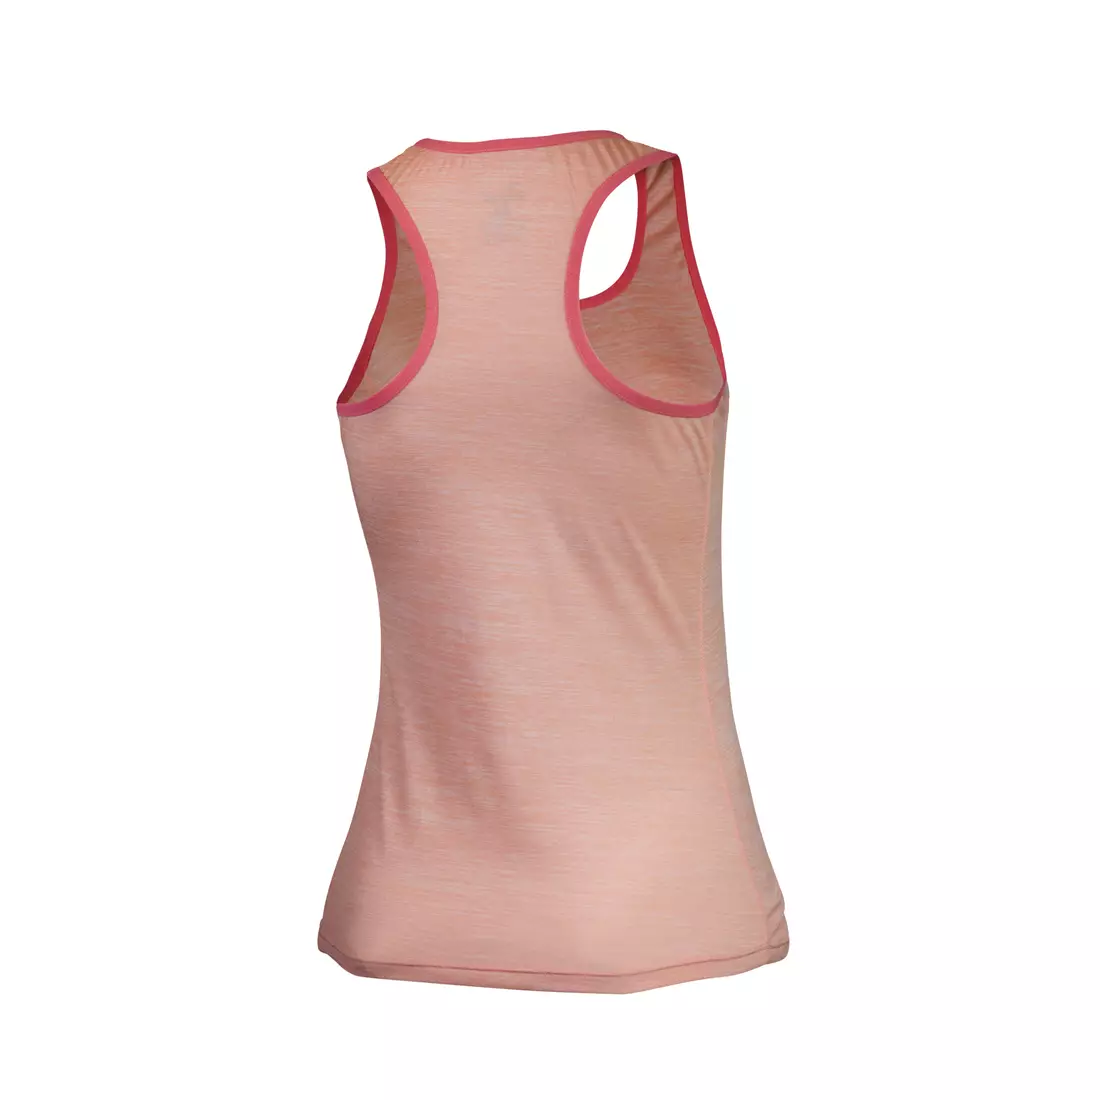 ROGELLI RUN DESIRE 840.265 - women's running top, tank top, pink-coral